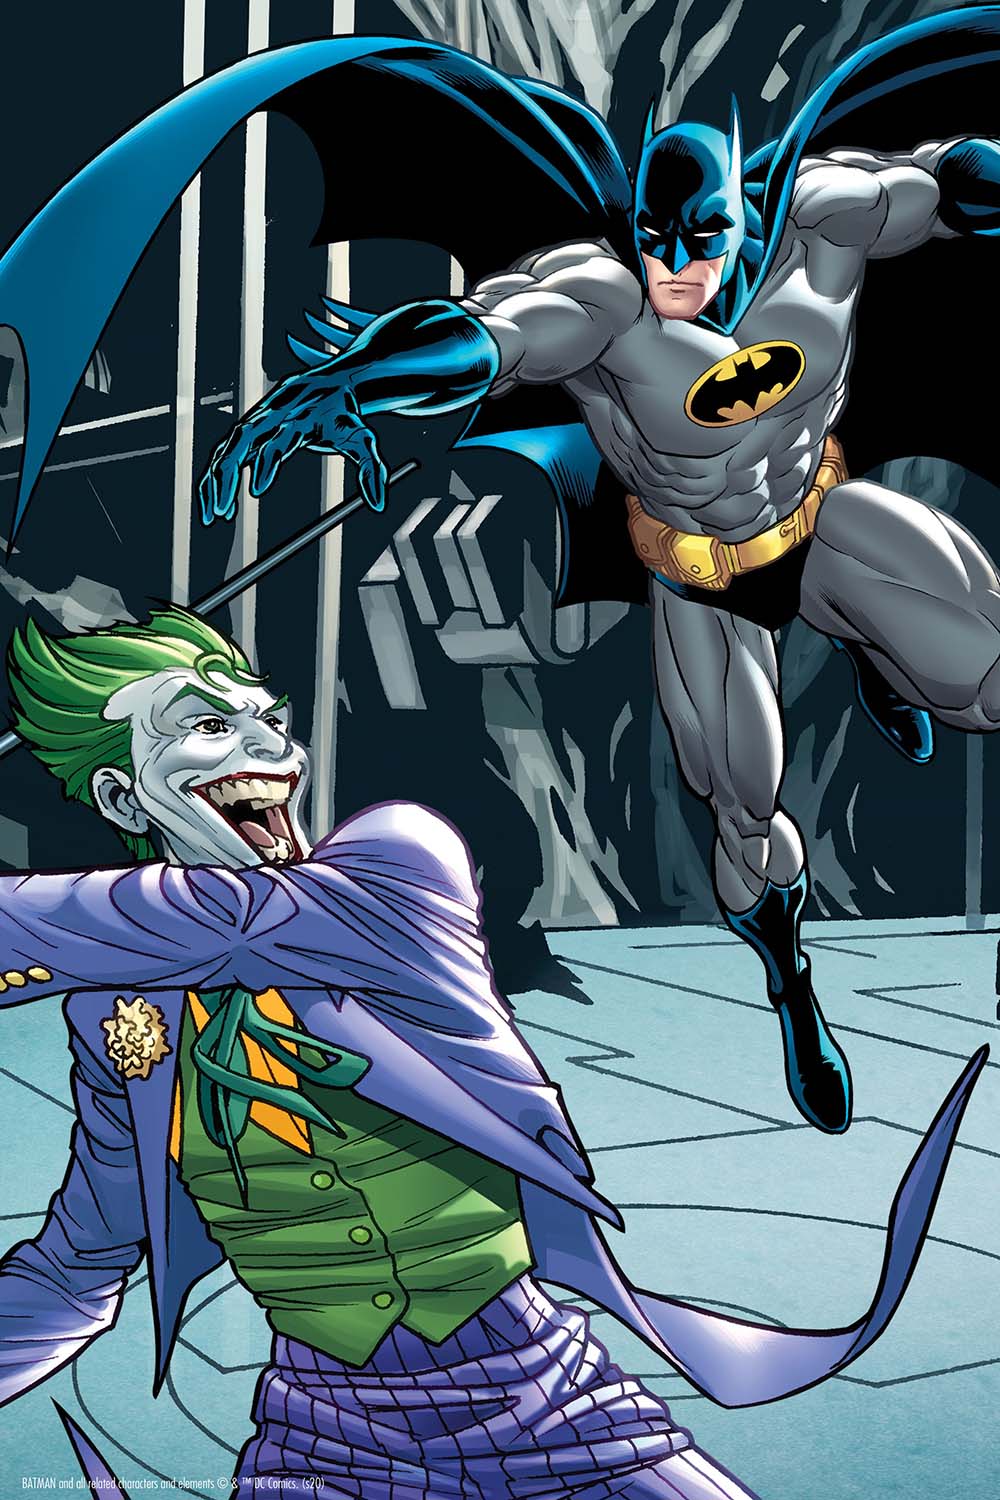 Batman Vs Joker DC Comics - Scratch and Dent Superheroes Jigsaw Puzzle